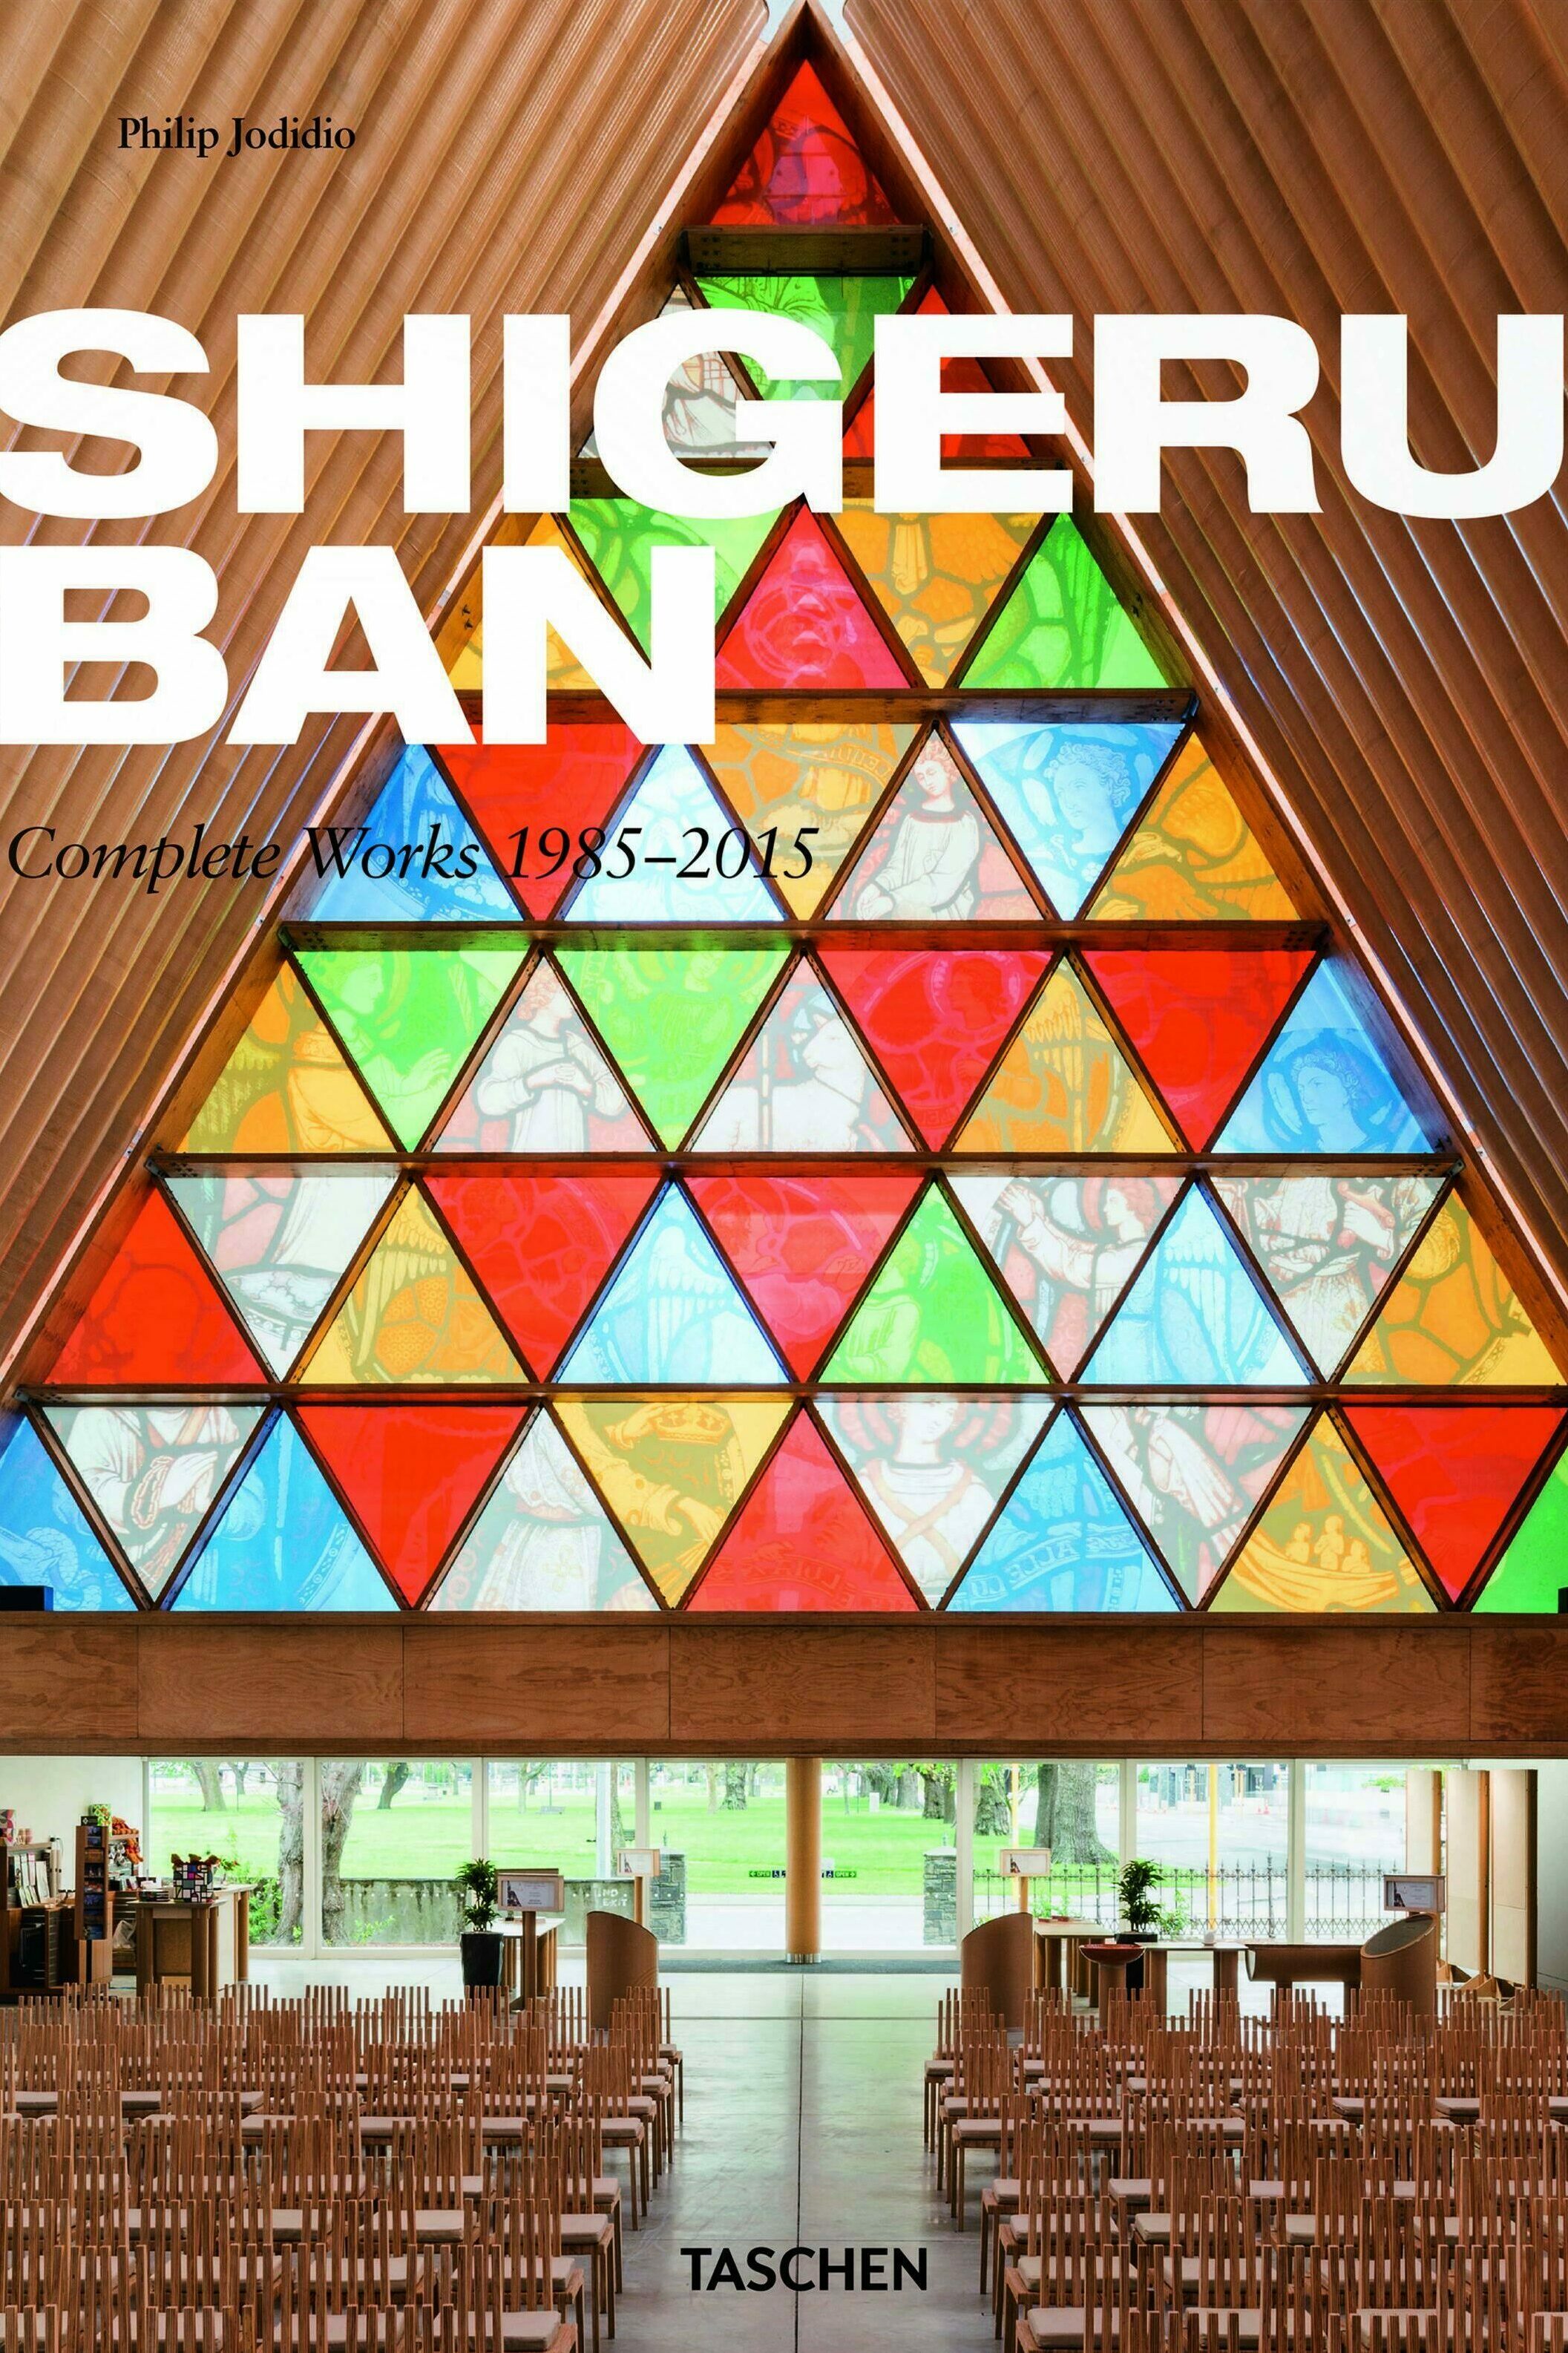 shigeru ban. complete works 1985 – 2015, Philip Jodidio, kunstbuch bildband fotobuch